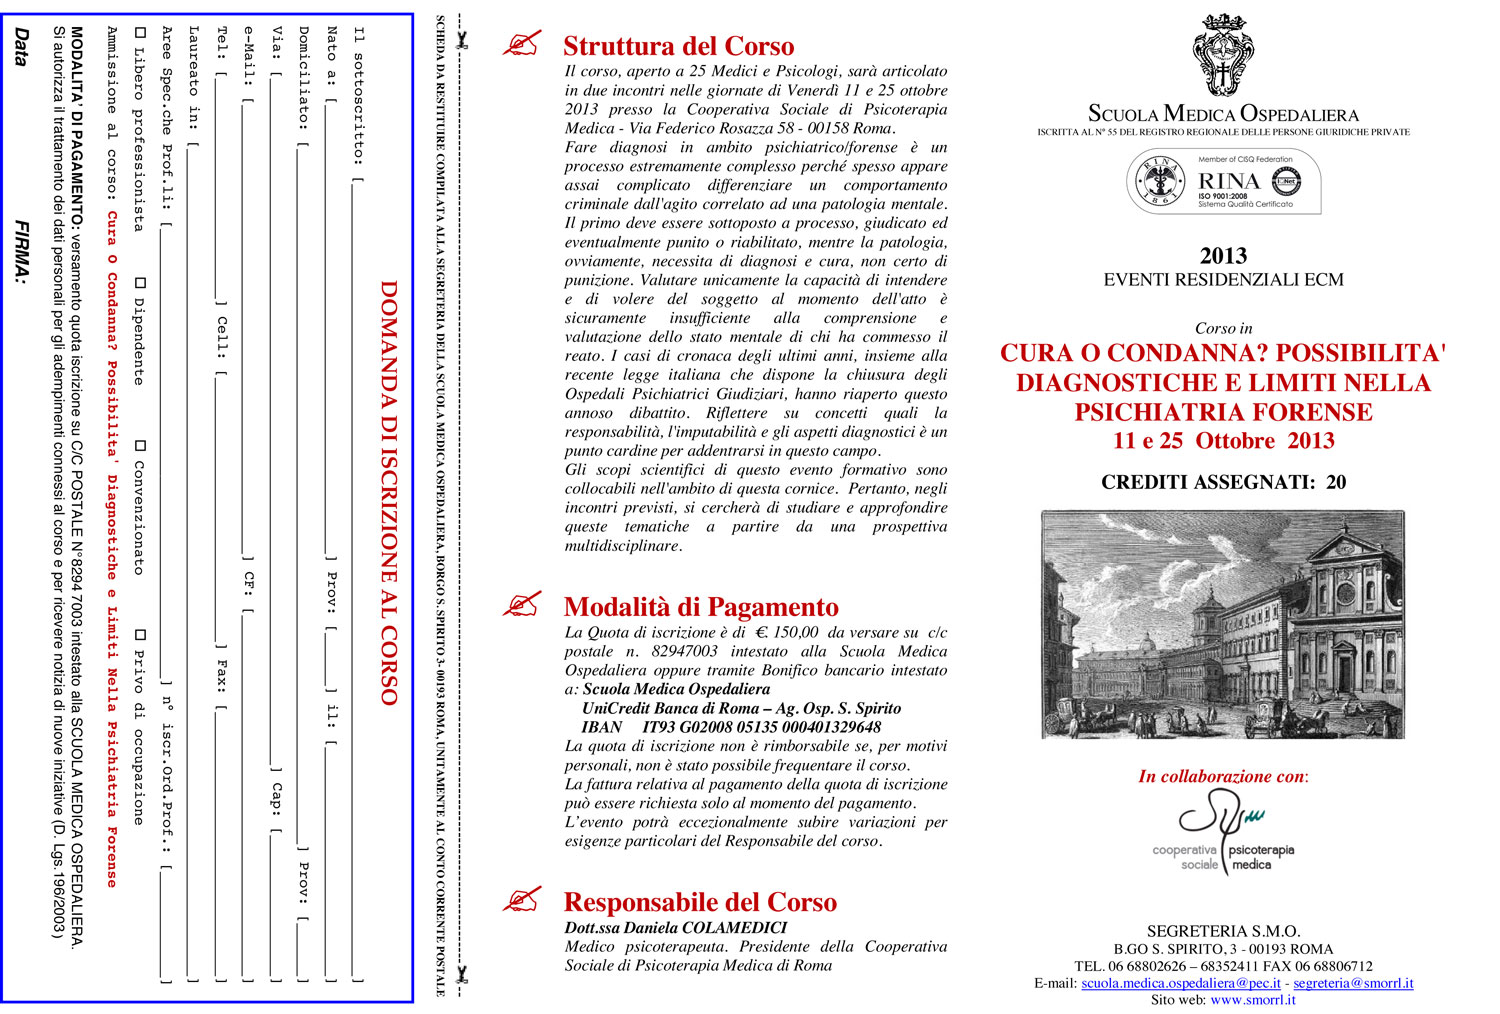 Corso-in-CURA-O-CONDANNA-brochure-1